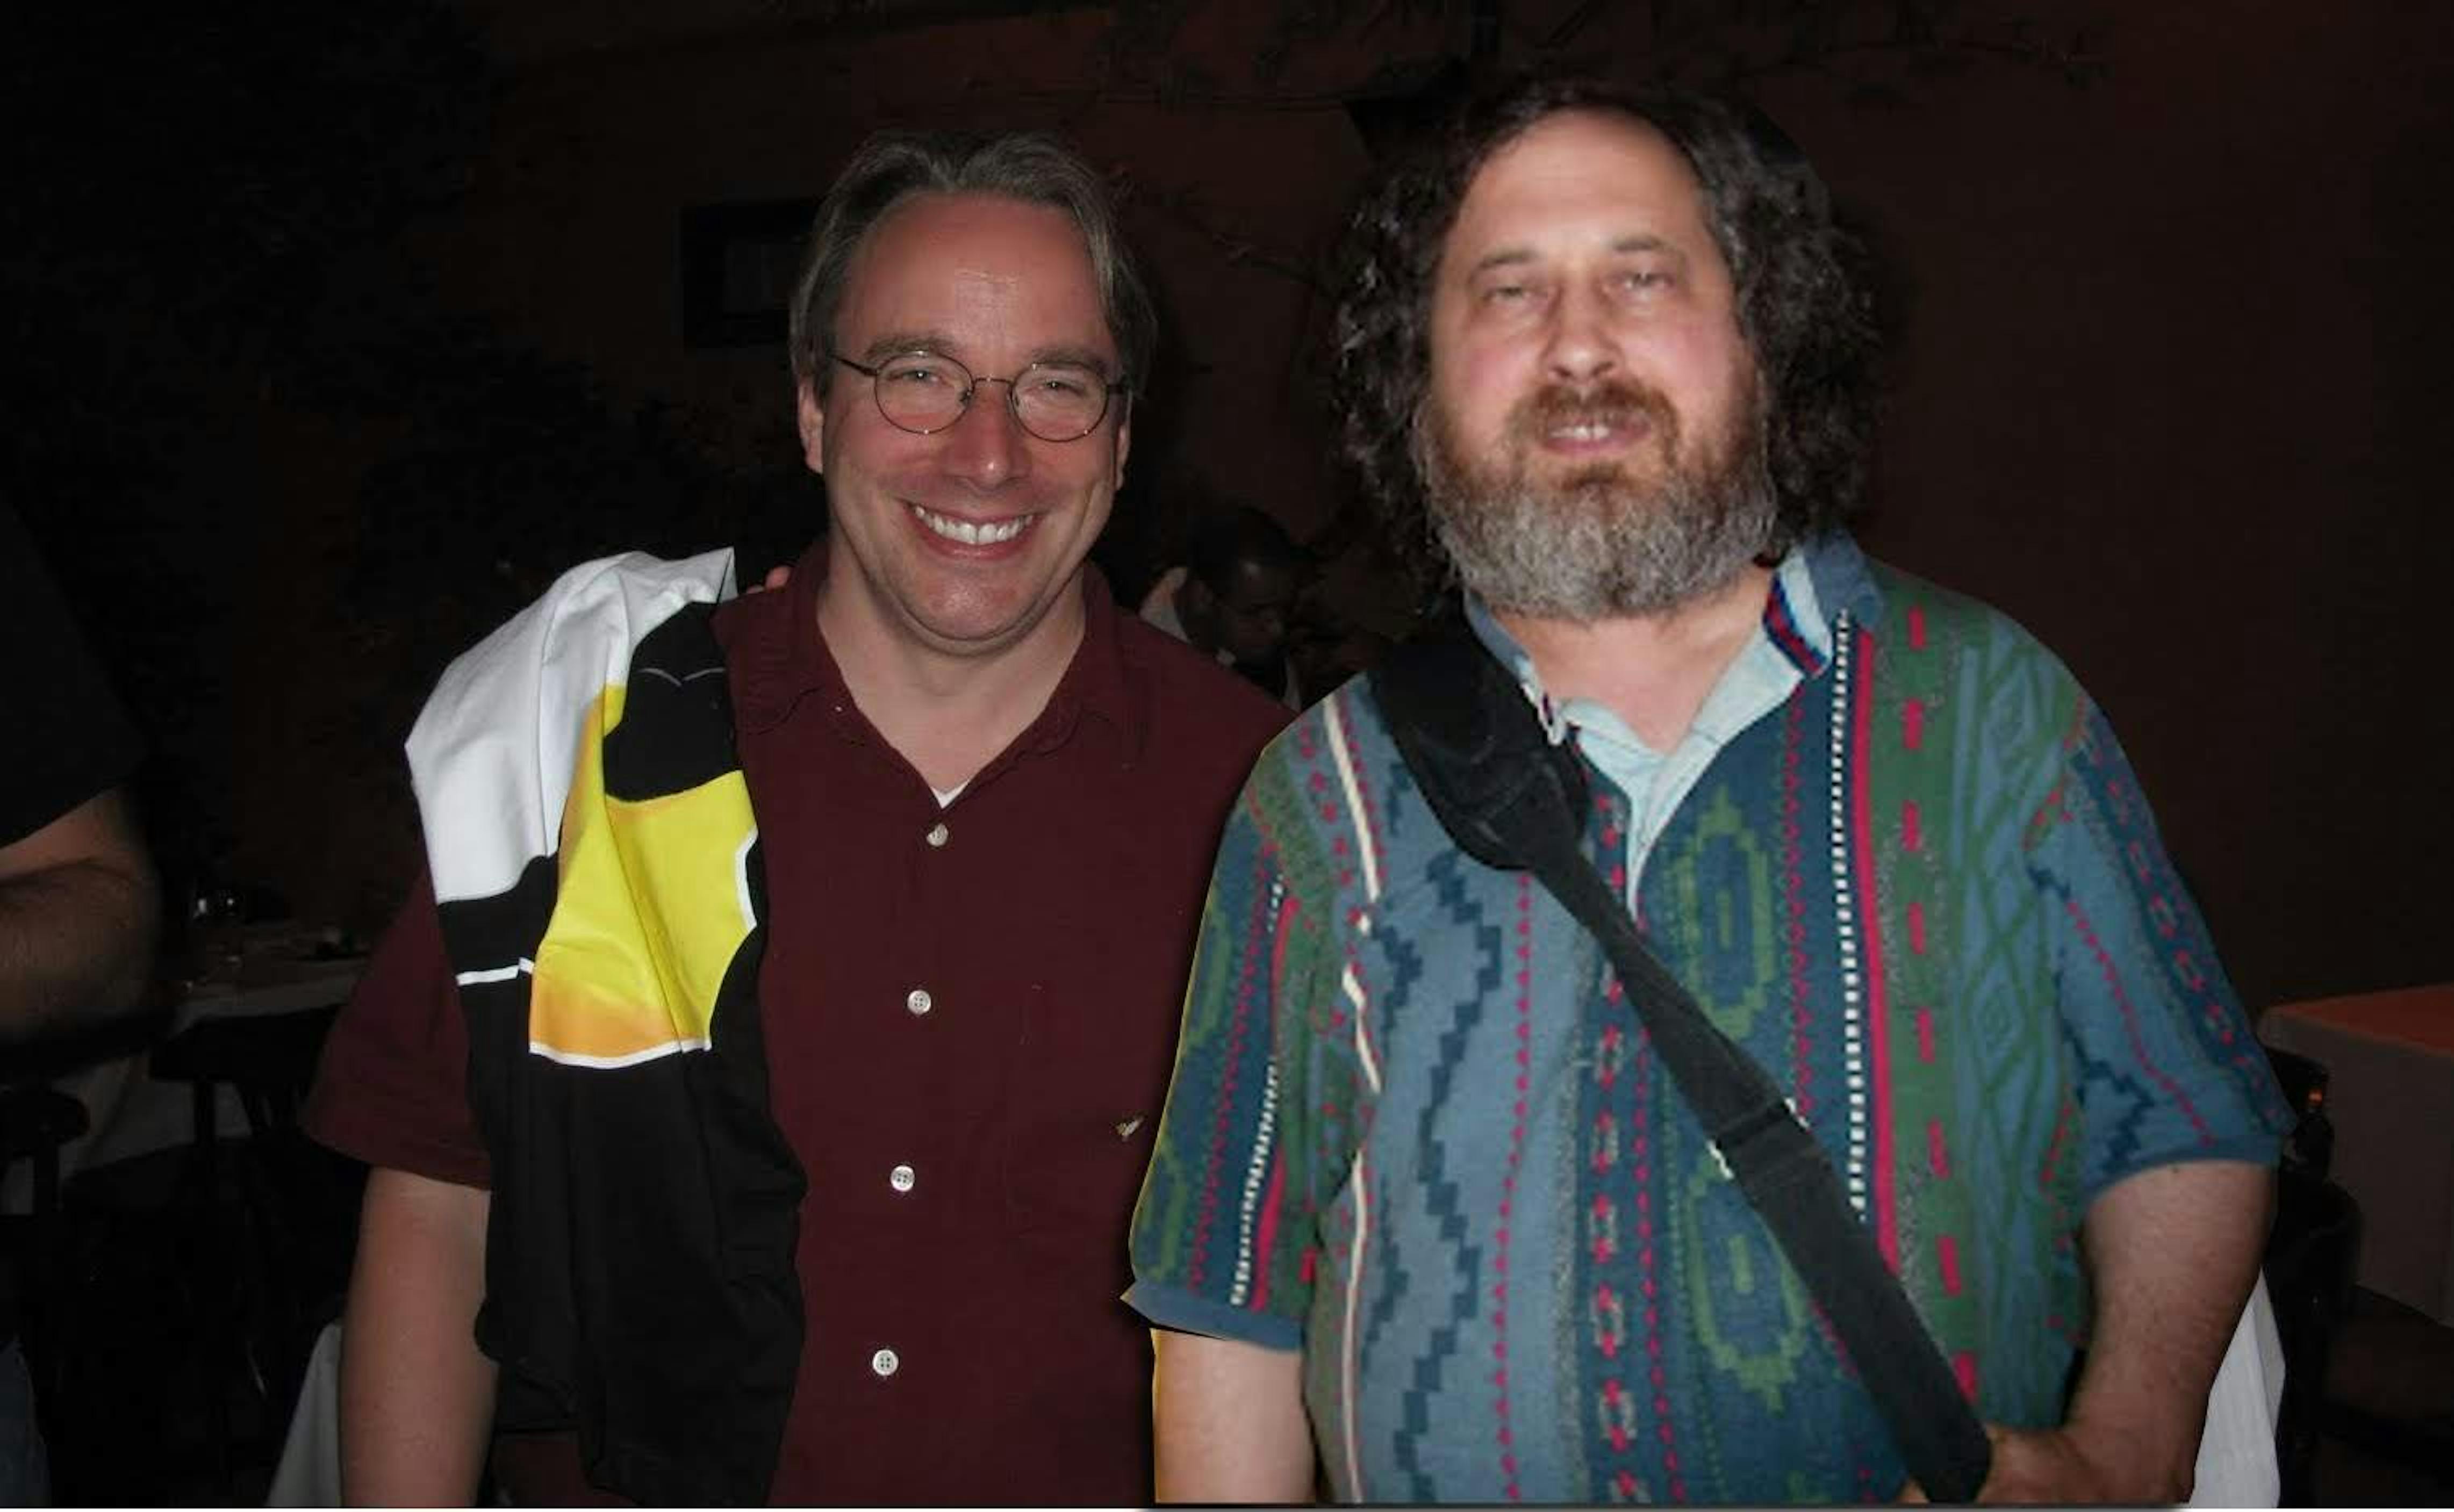 Richard Stallman and Linus Torvalds